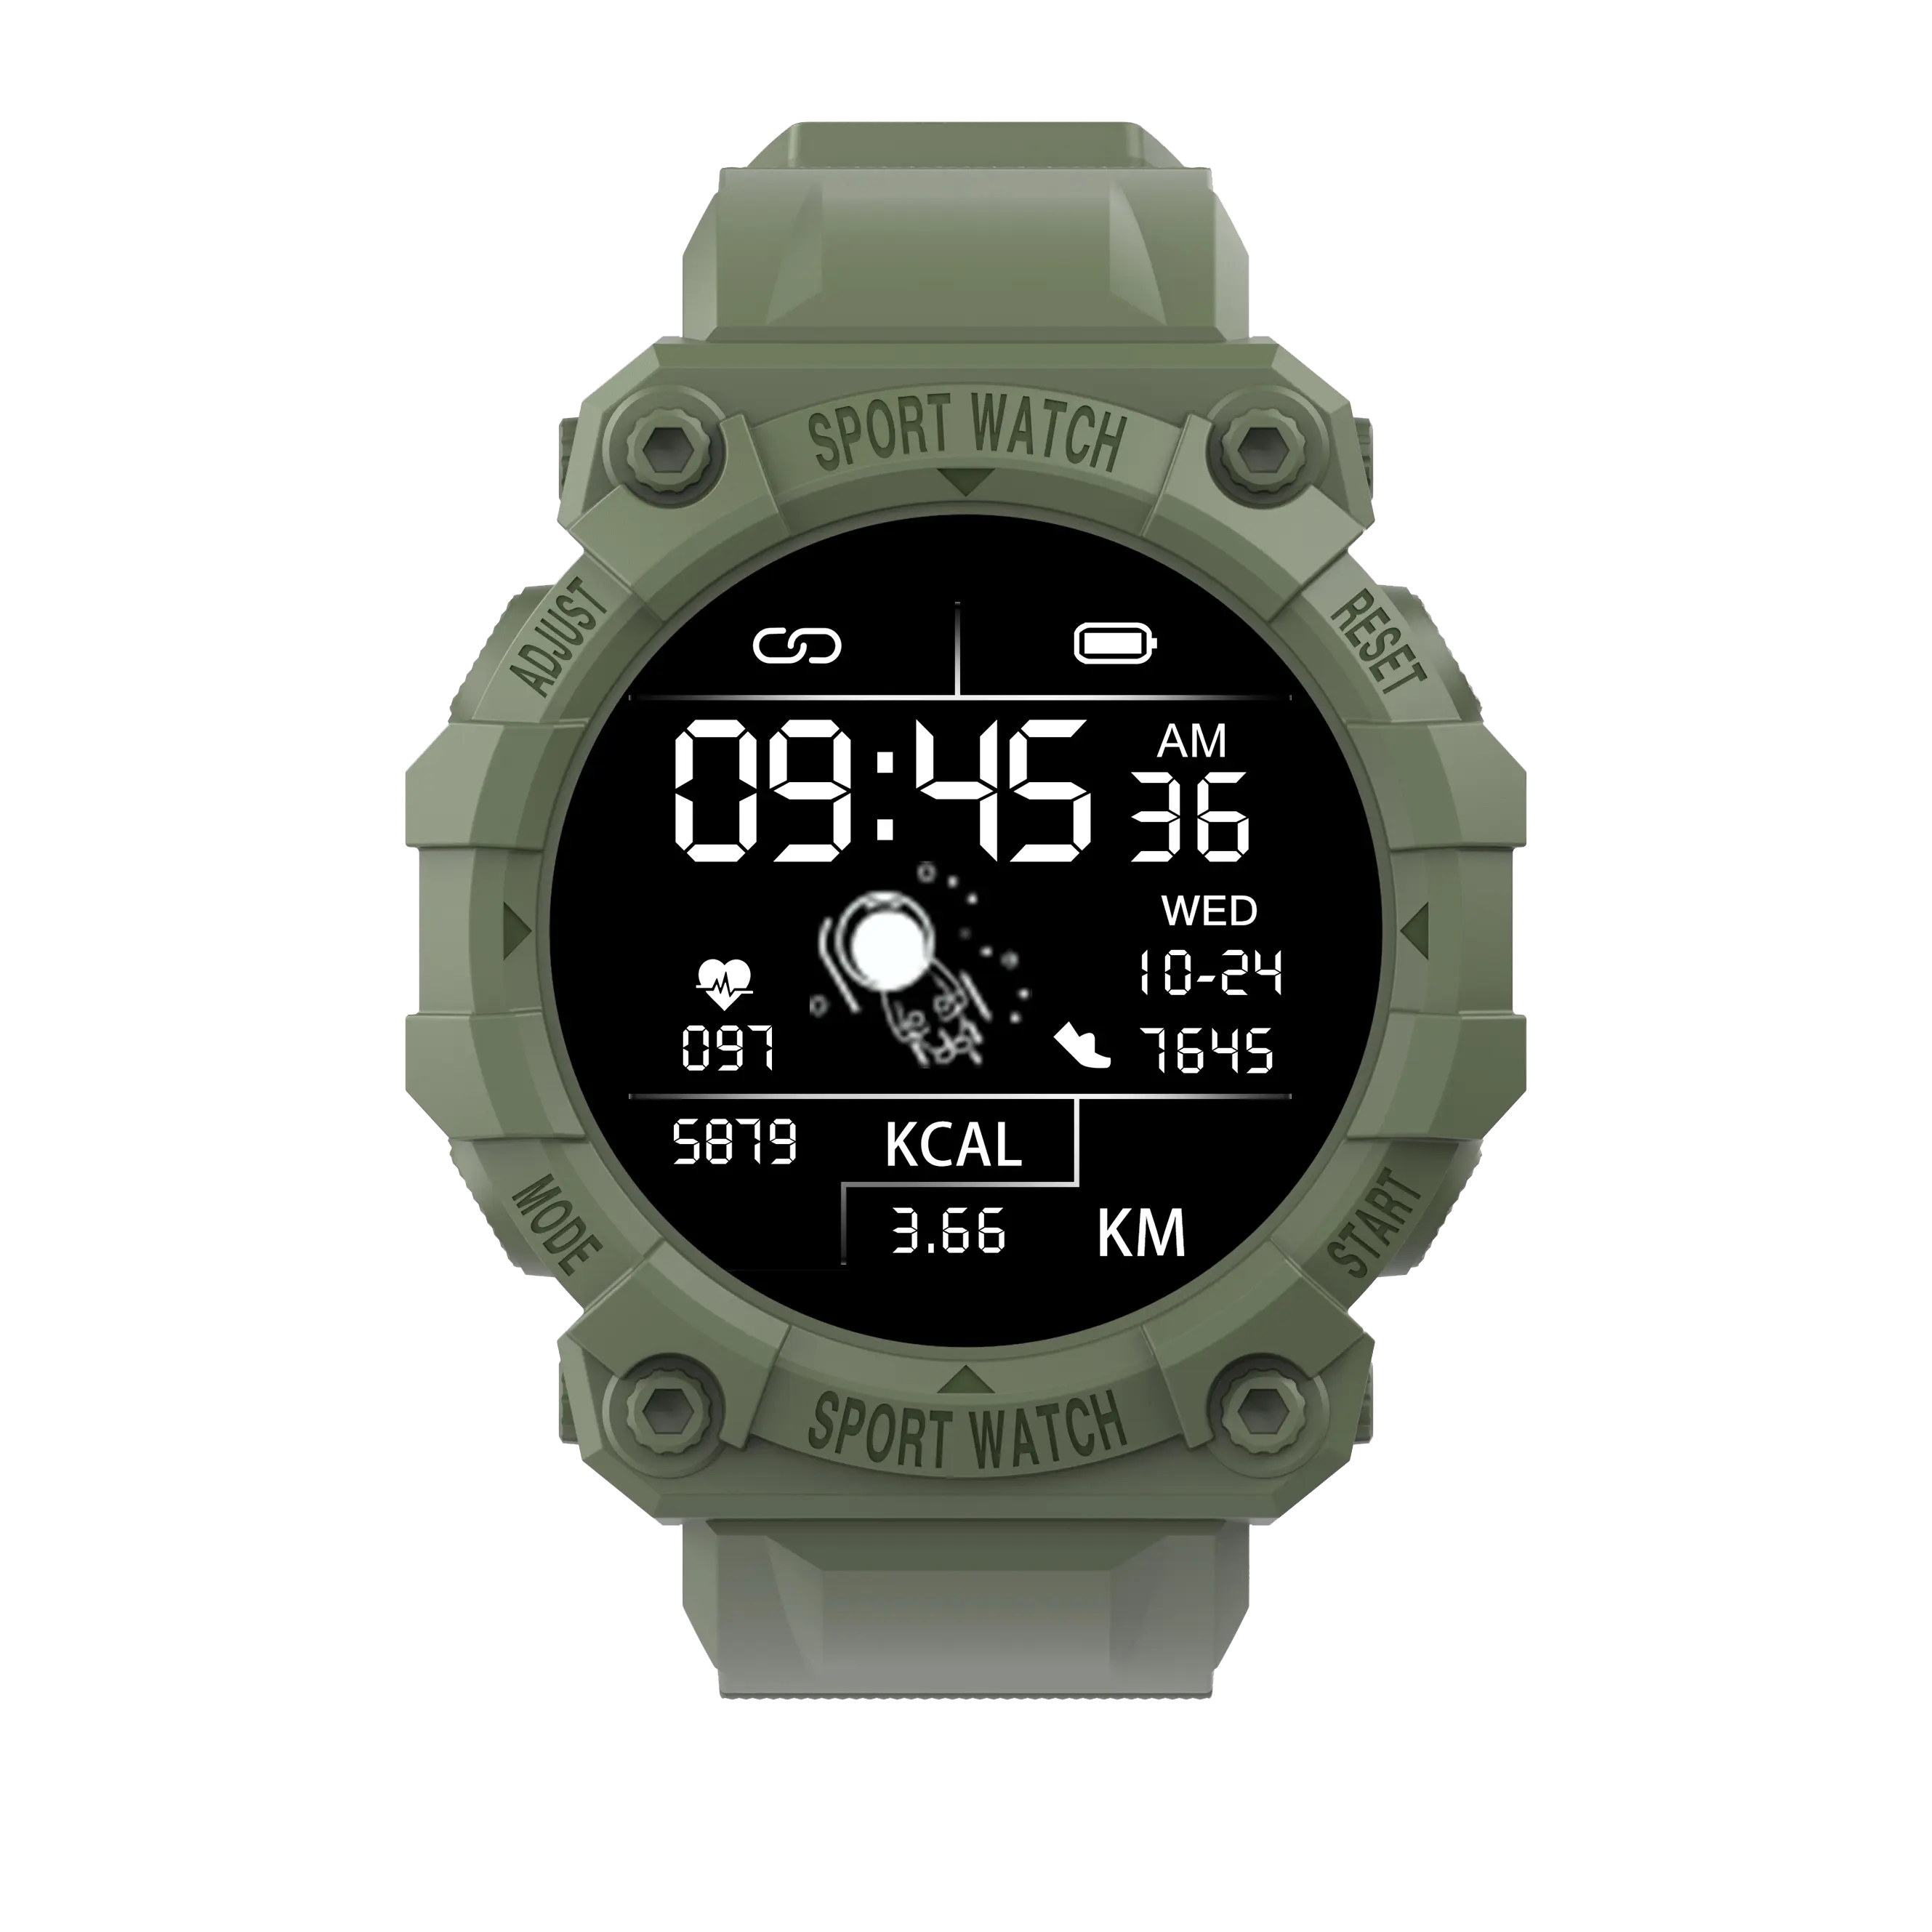 New Arrivals FD68 Digital Watches Heart Rate Monitoring Fitness Clock Smartwatch IP67 Waterproof Smart Watch FD68 pk D20/Y68